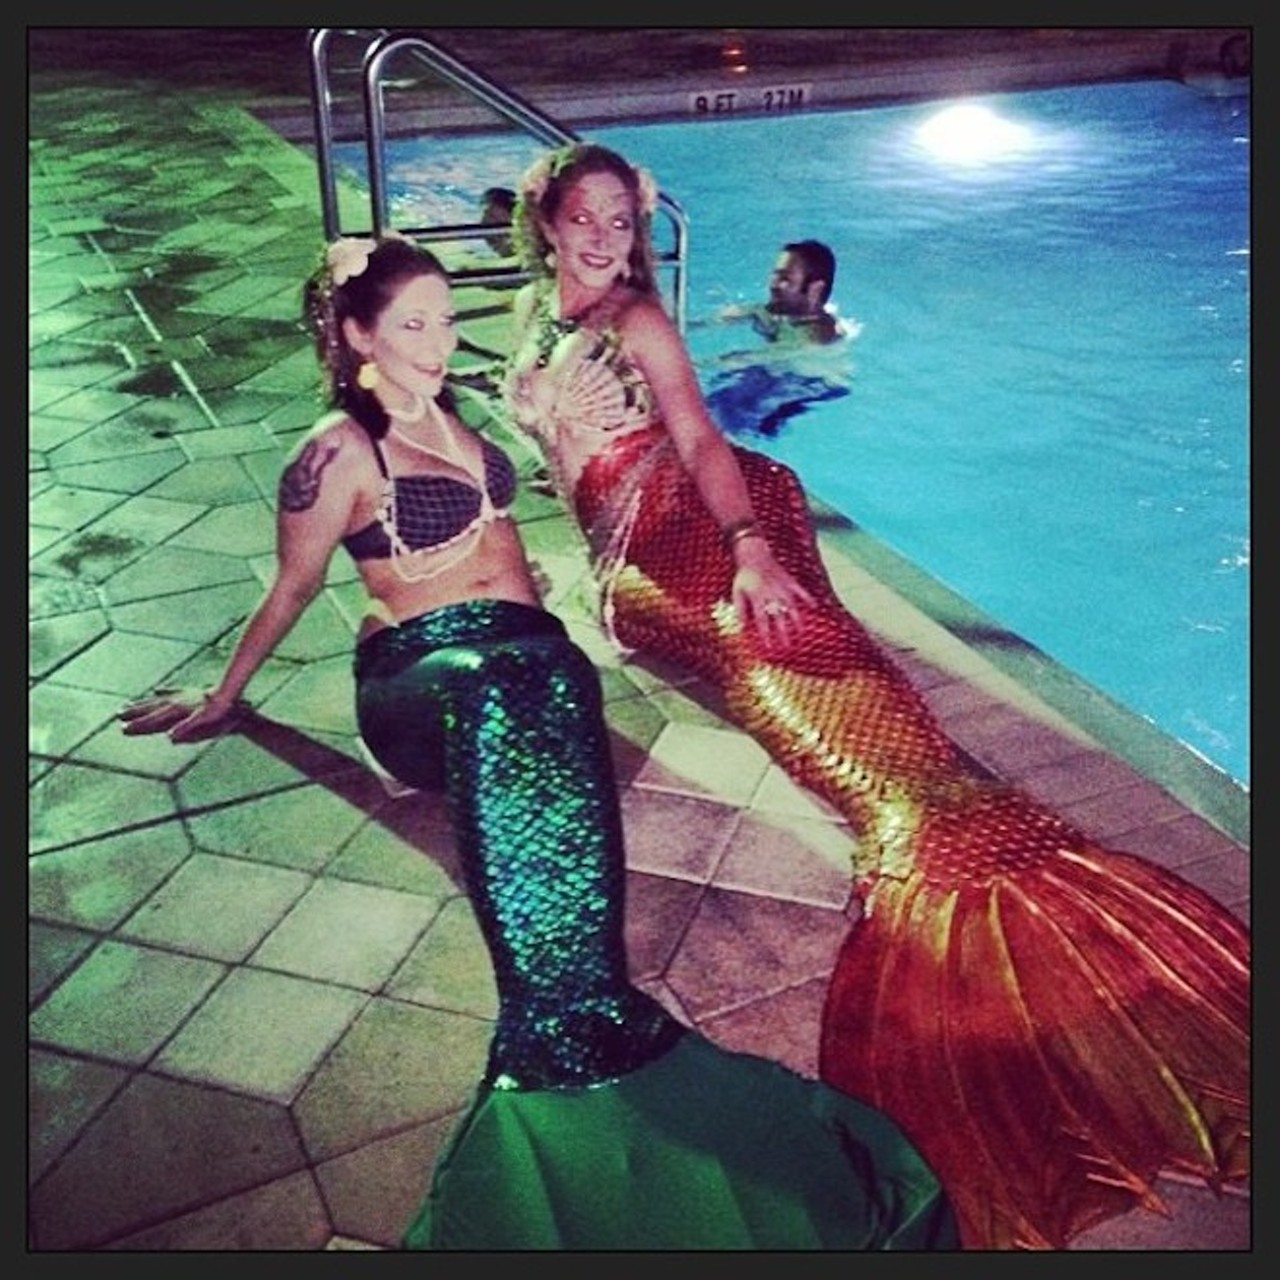 Mermaids at the Spooky Empire May-hem pool party.Instagram: _snegurochka_